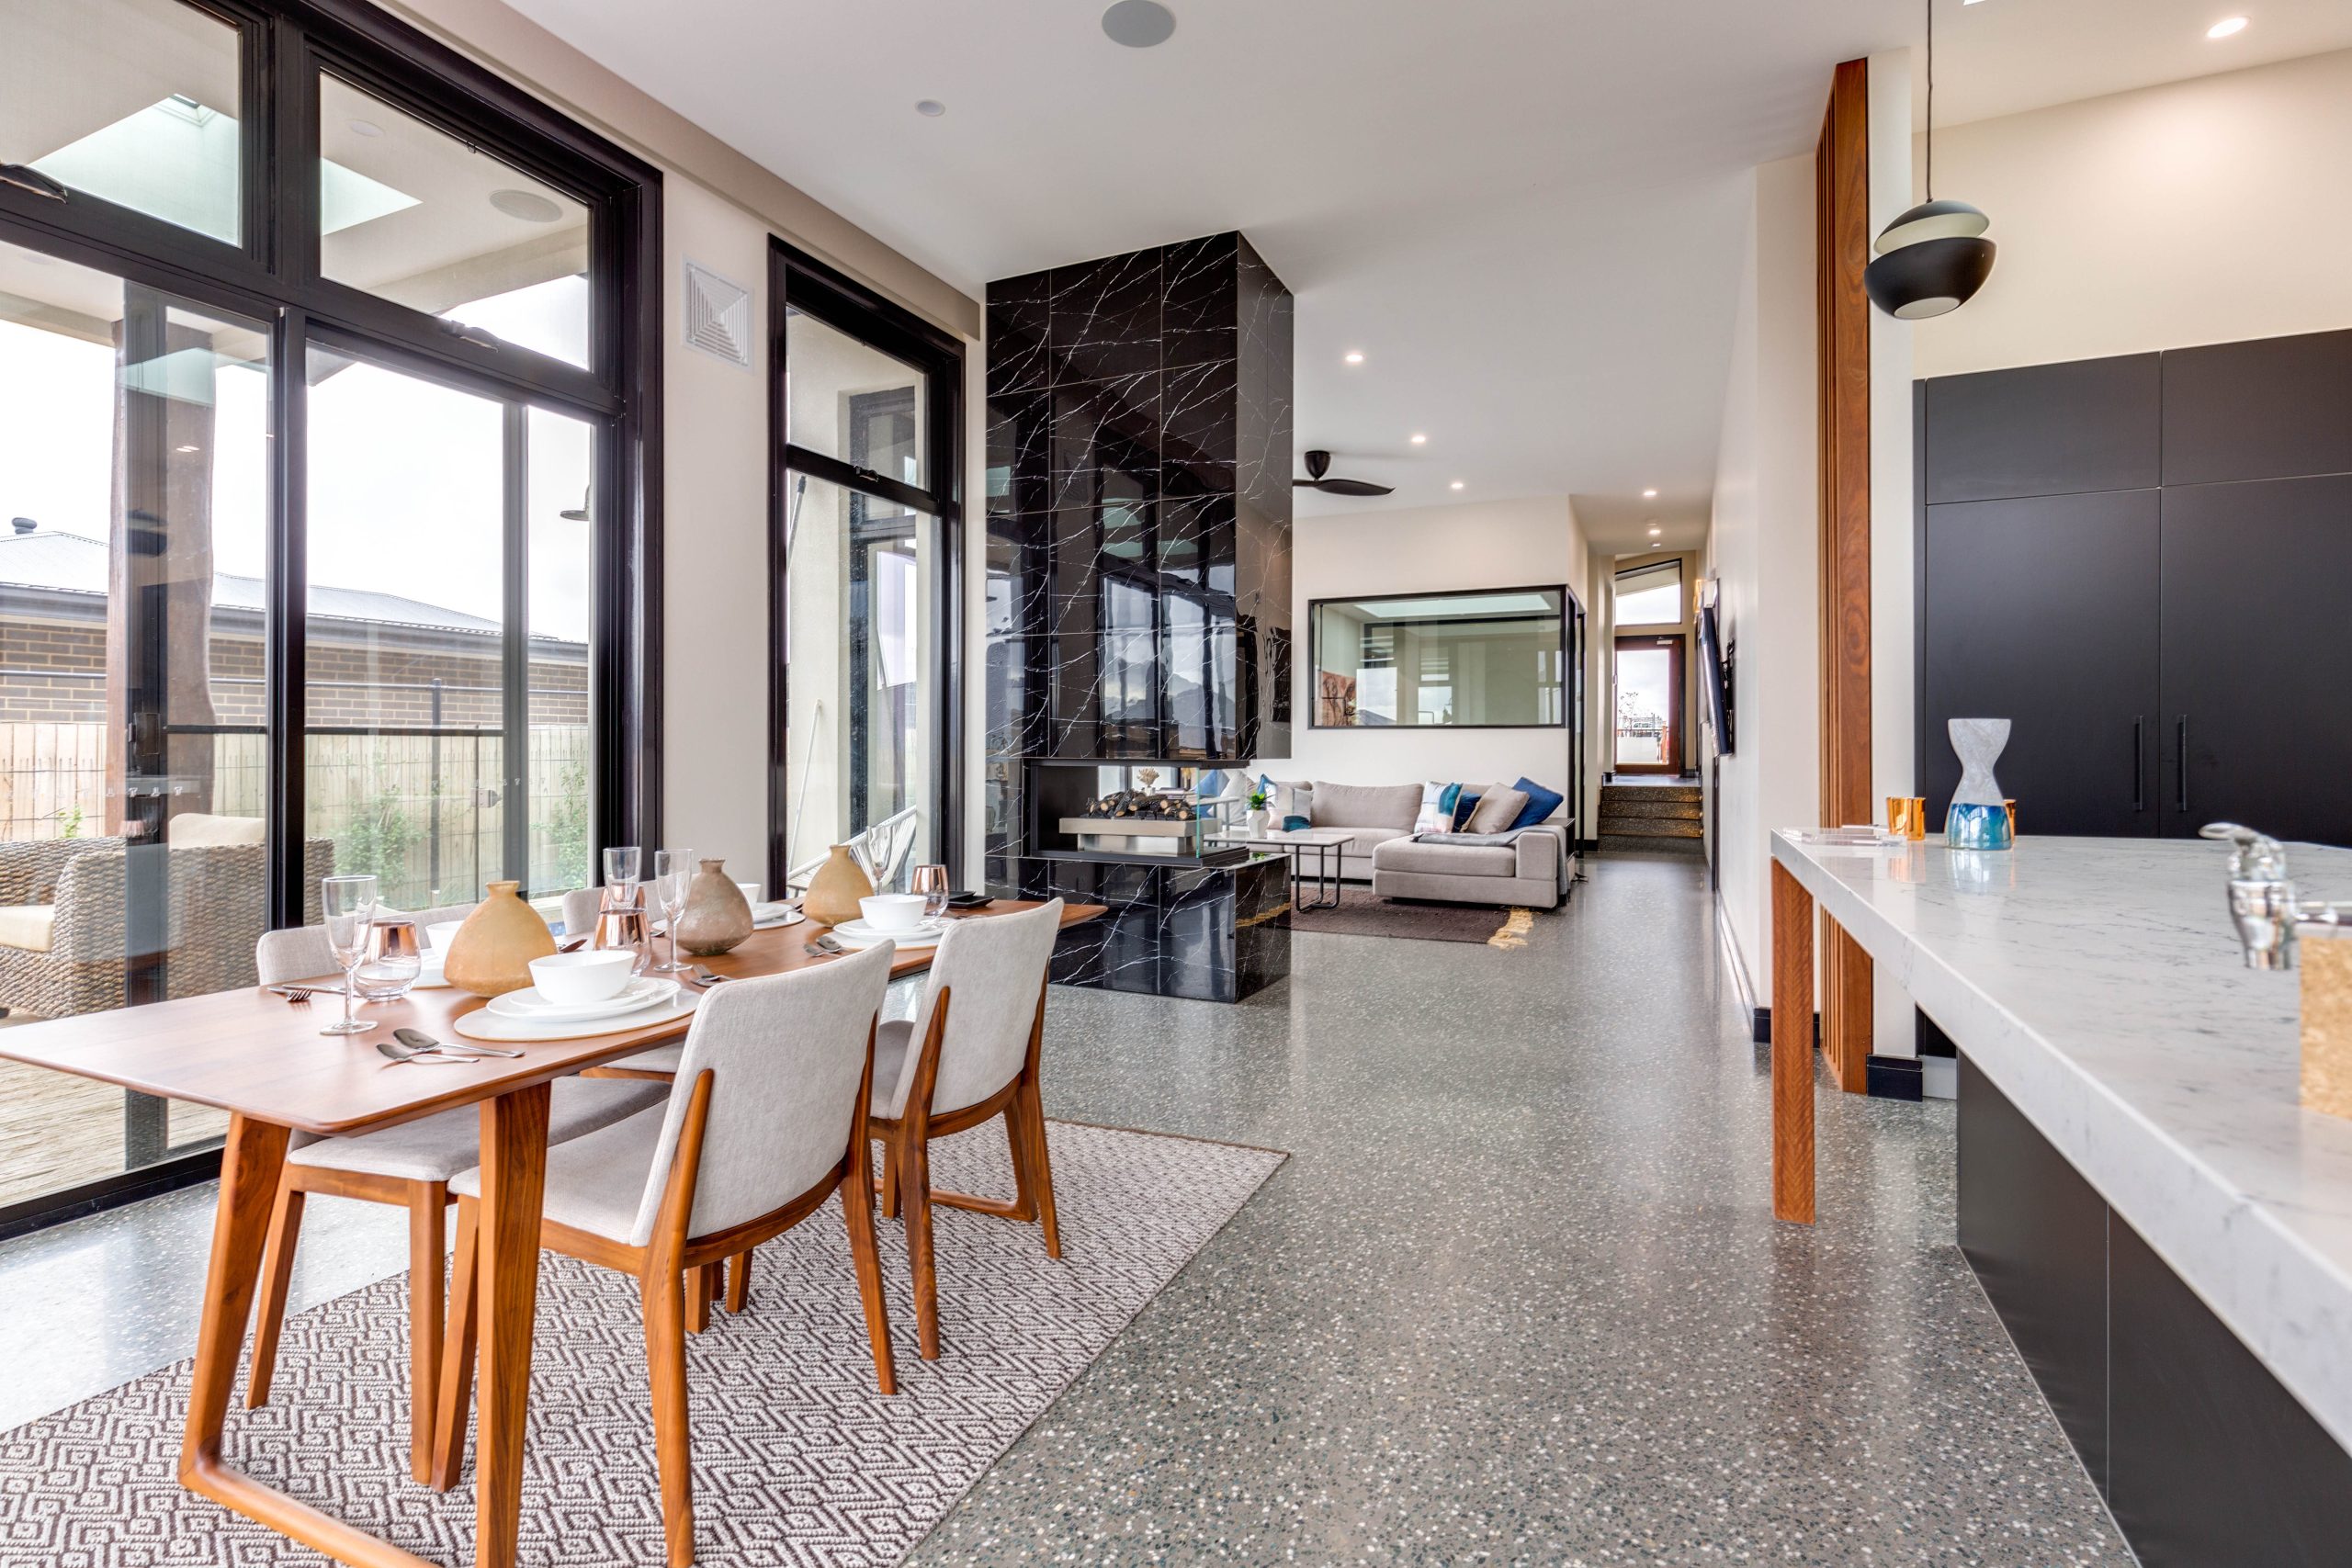 Canberra,,australia,,may,18,,2018:,spacious,kitchen,furnished,with